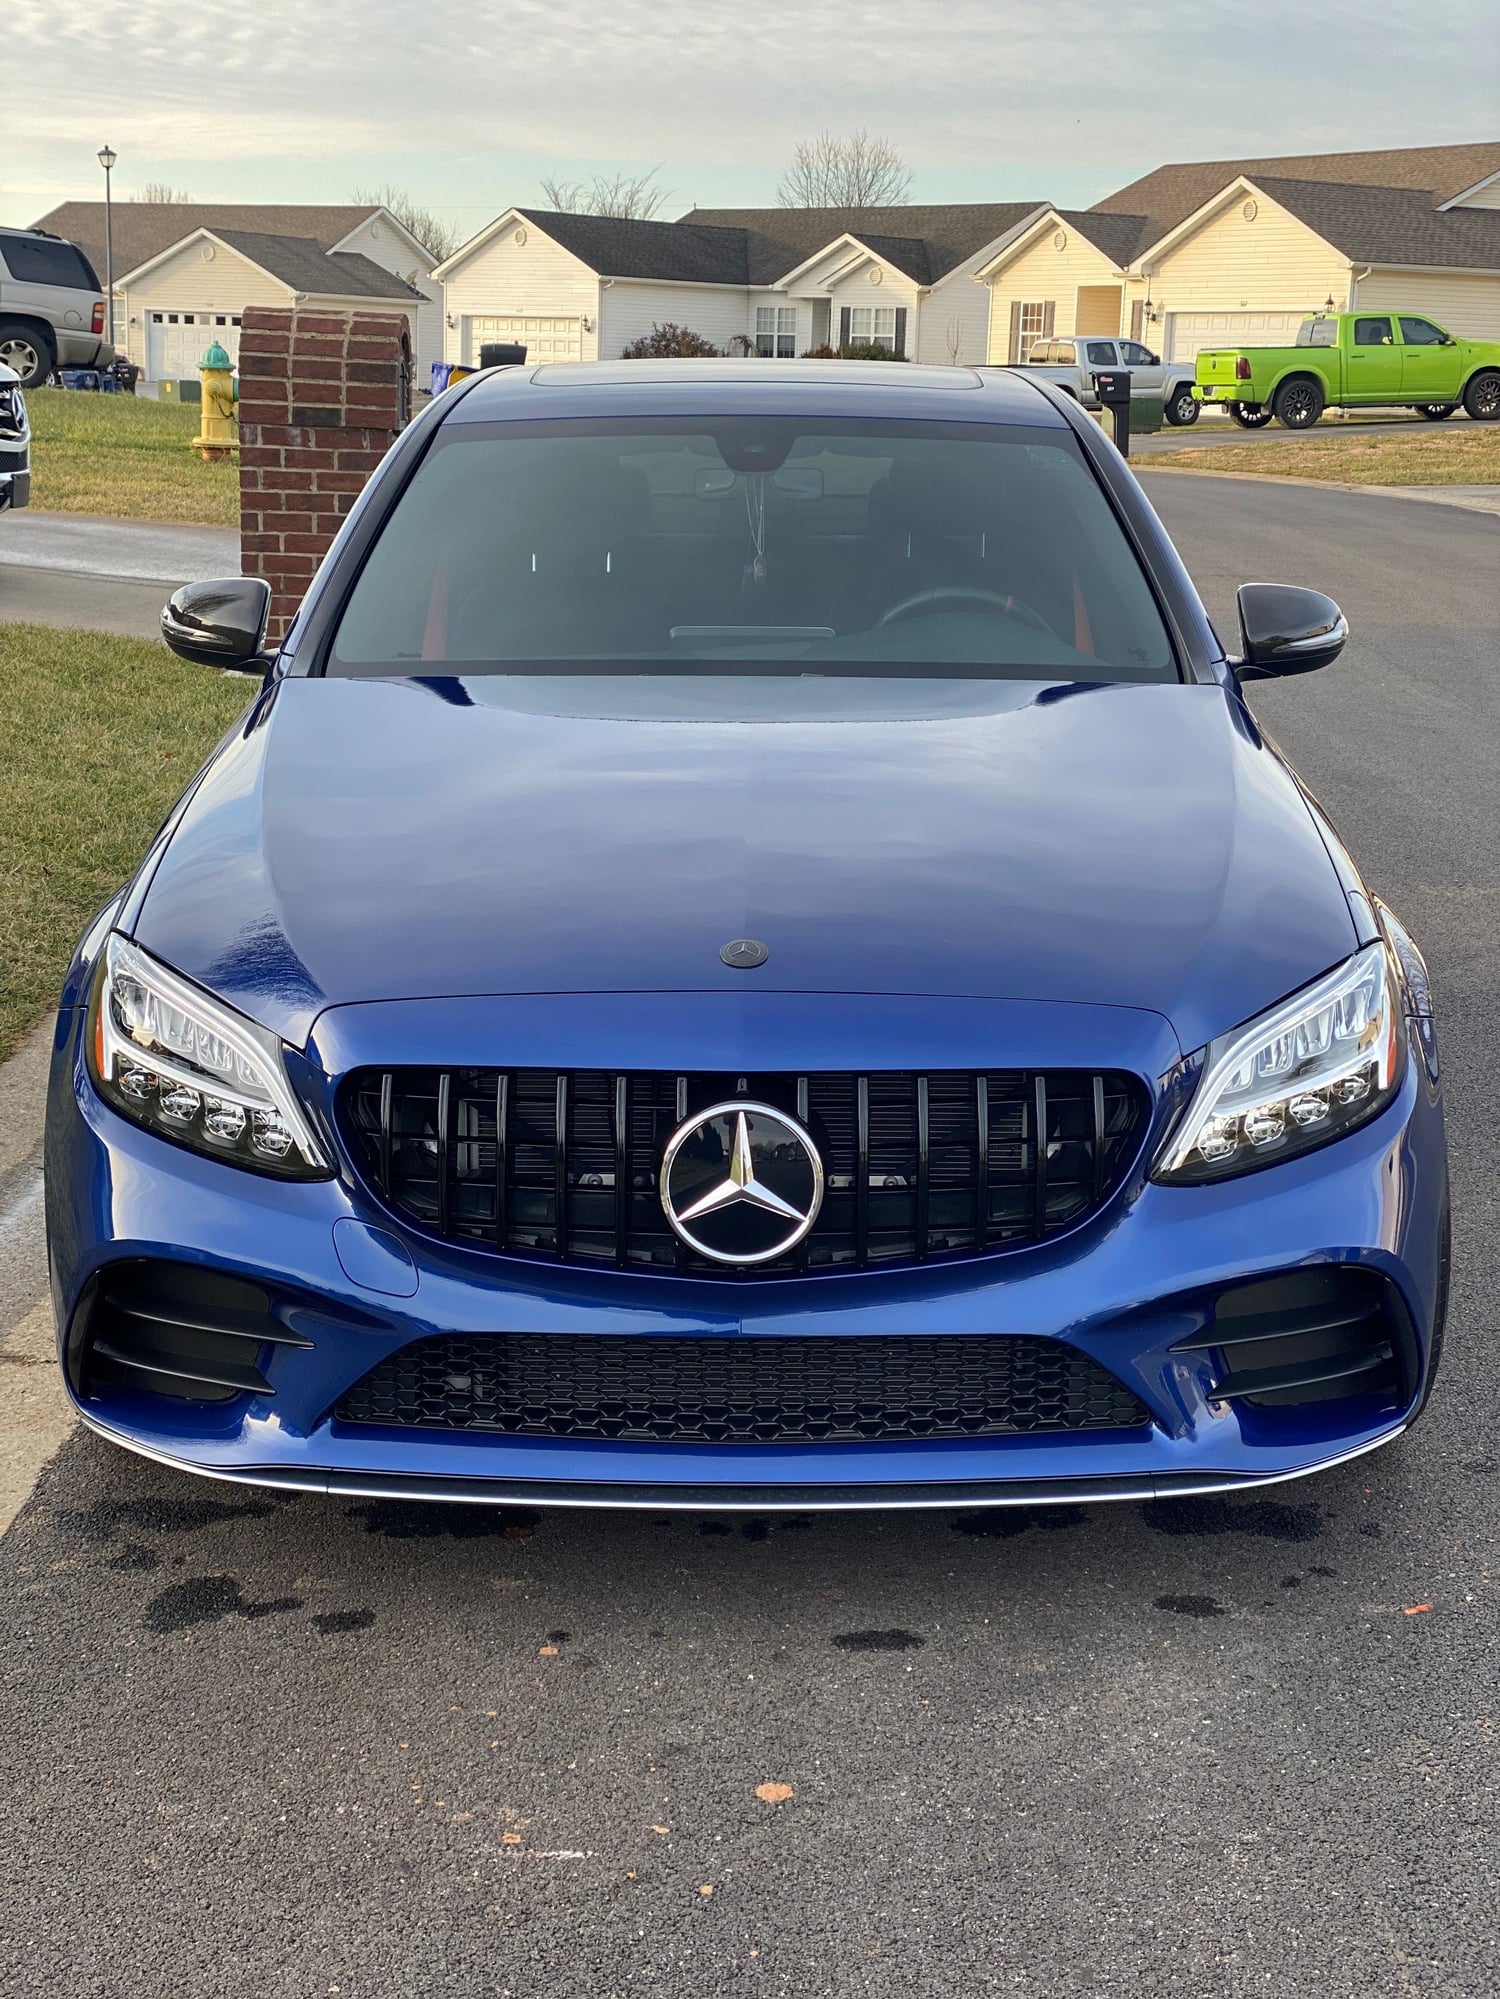 2019 Mercedes-Benz C43 AMG - 2019 C43 AMG - Used - VIN 55SWF6EB3KU307851 - 10,500 Miles - 6 cyl - AWD - Automatic - Sedan - Blue - Bowling Green, KY 42101, United States